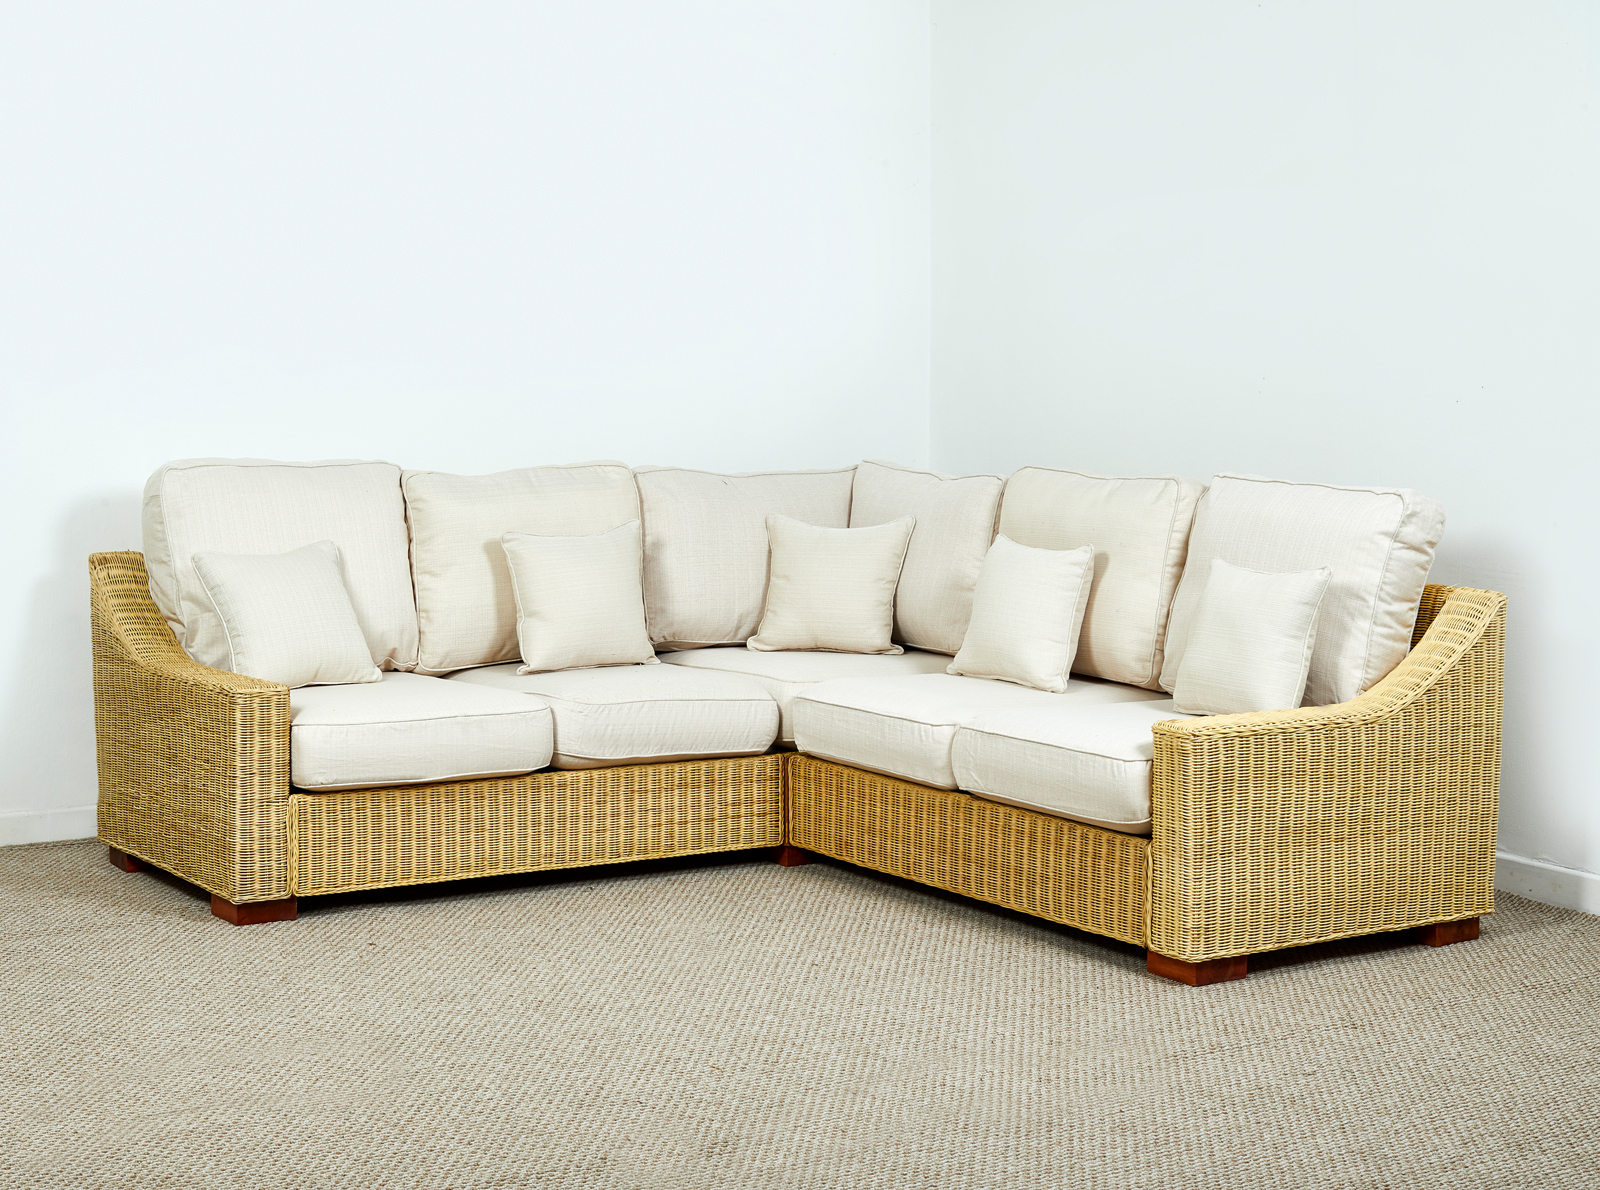 wicker sofa bed furniture